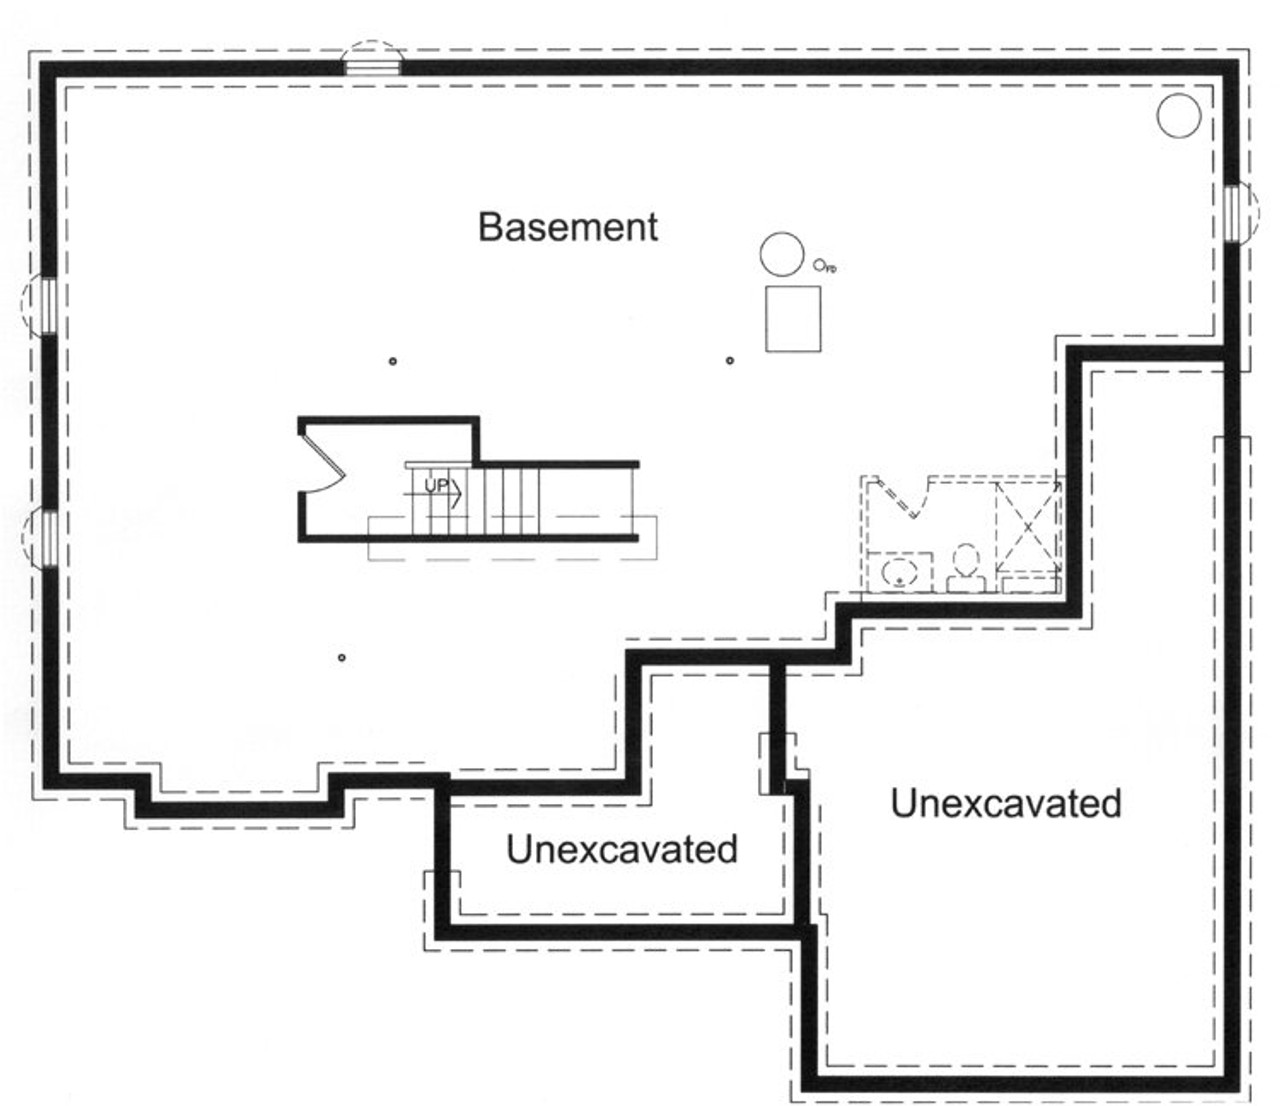 Secondary Image - Cottage House Plan - The Seacrest 87152 - Basement Floor Plan